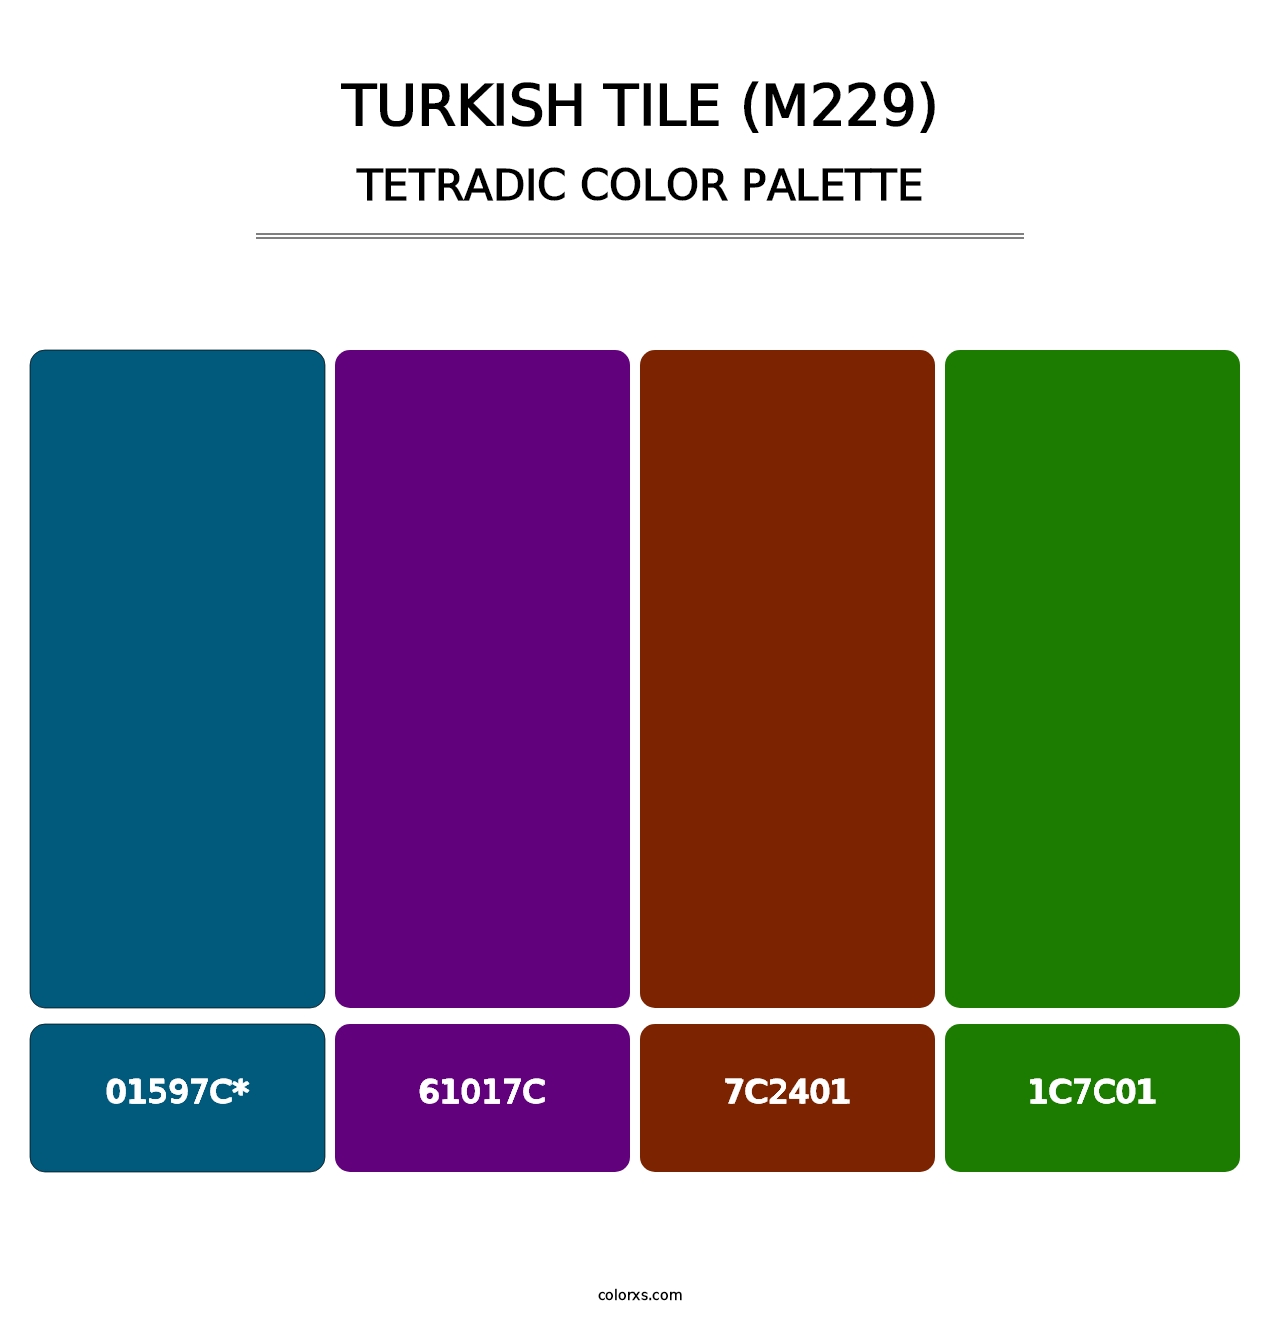 Turkish Tile (M229) - Tetradic Color Palette